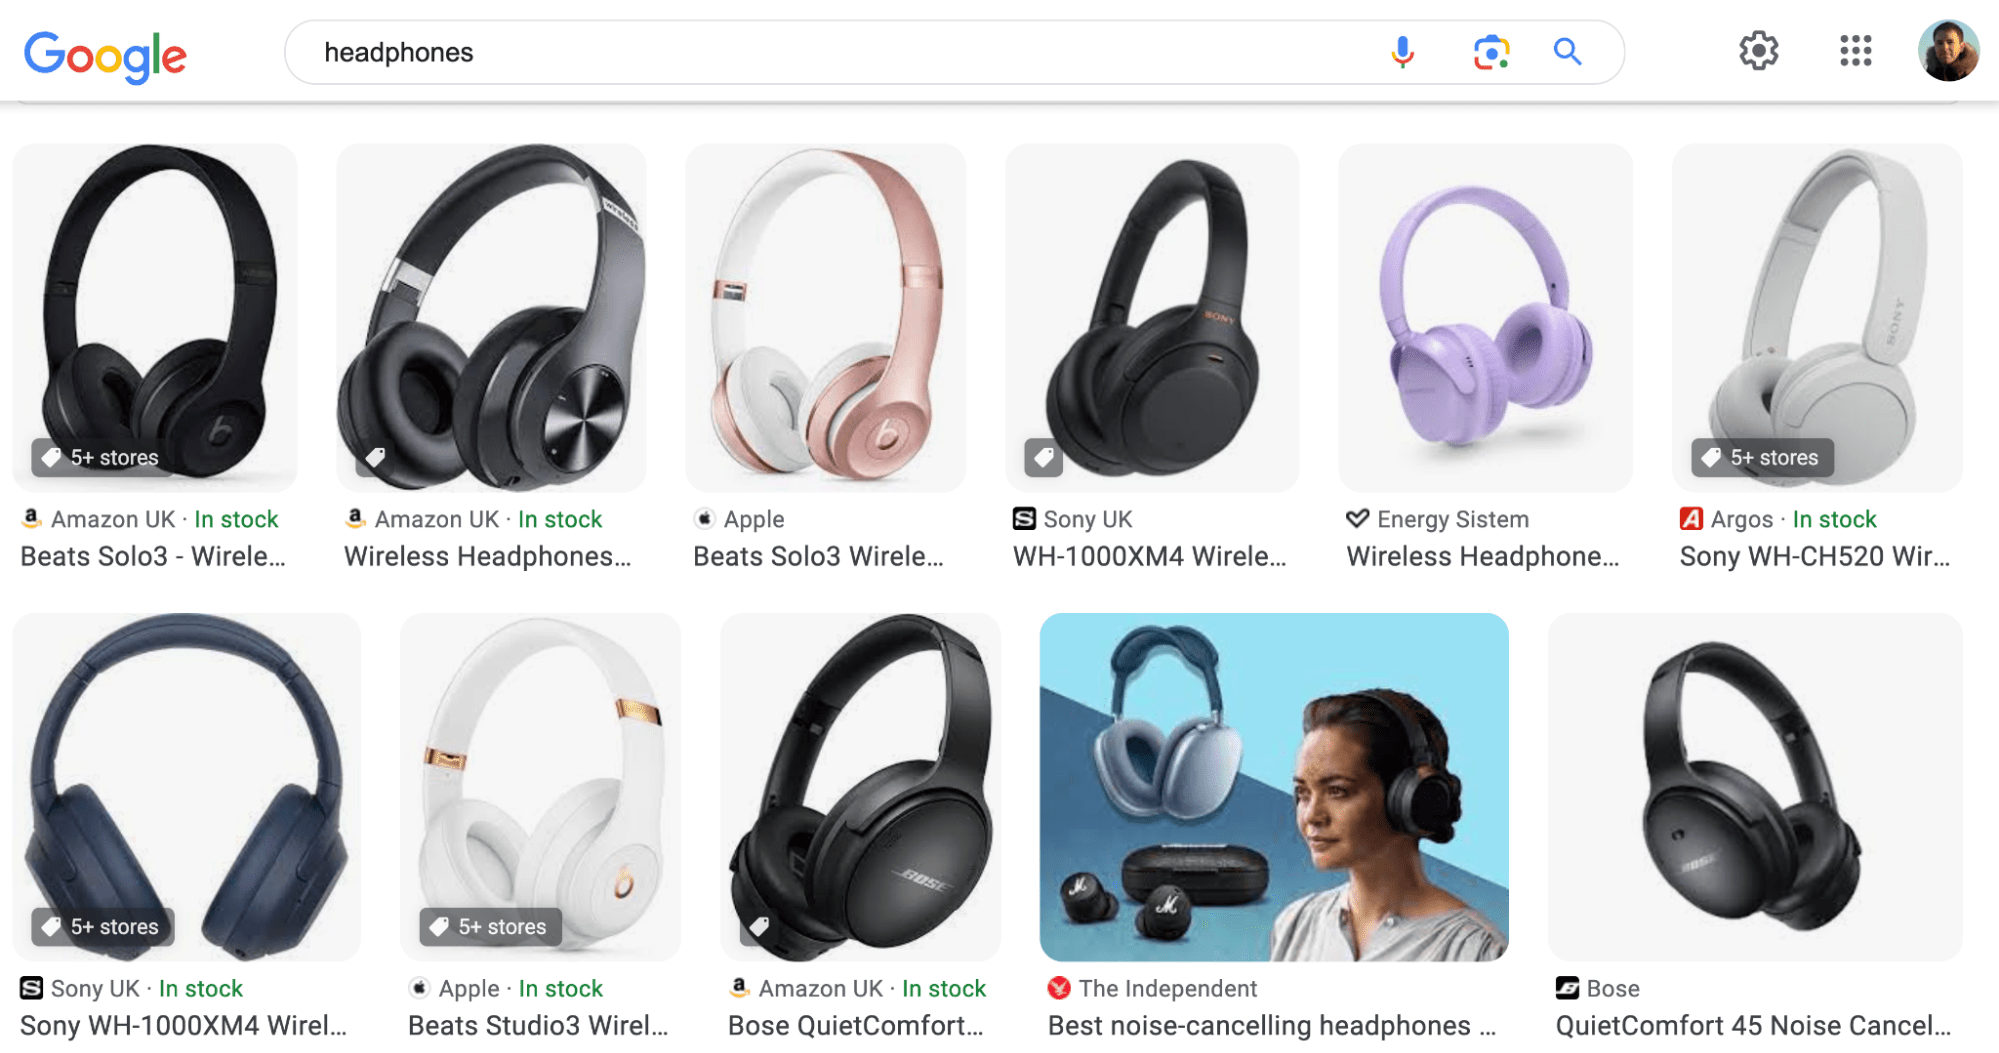 Auriculares SERP, a través de Google Imágenes